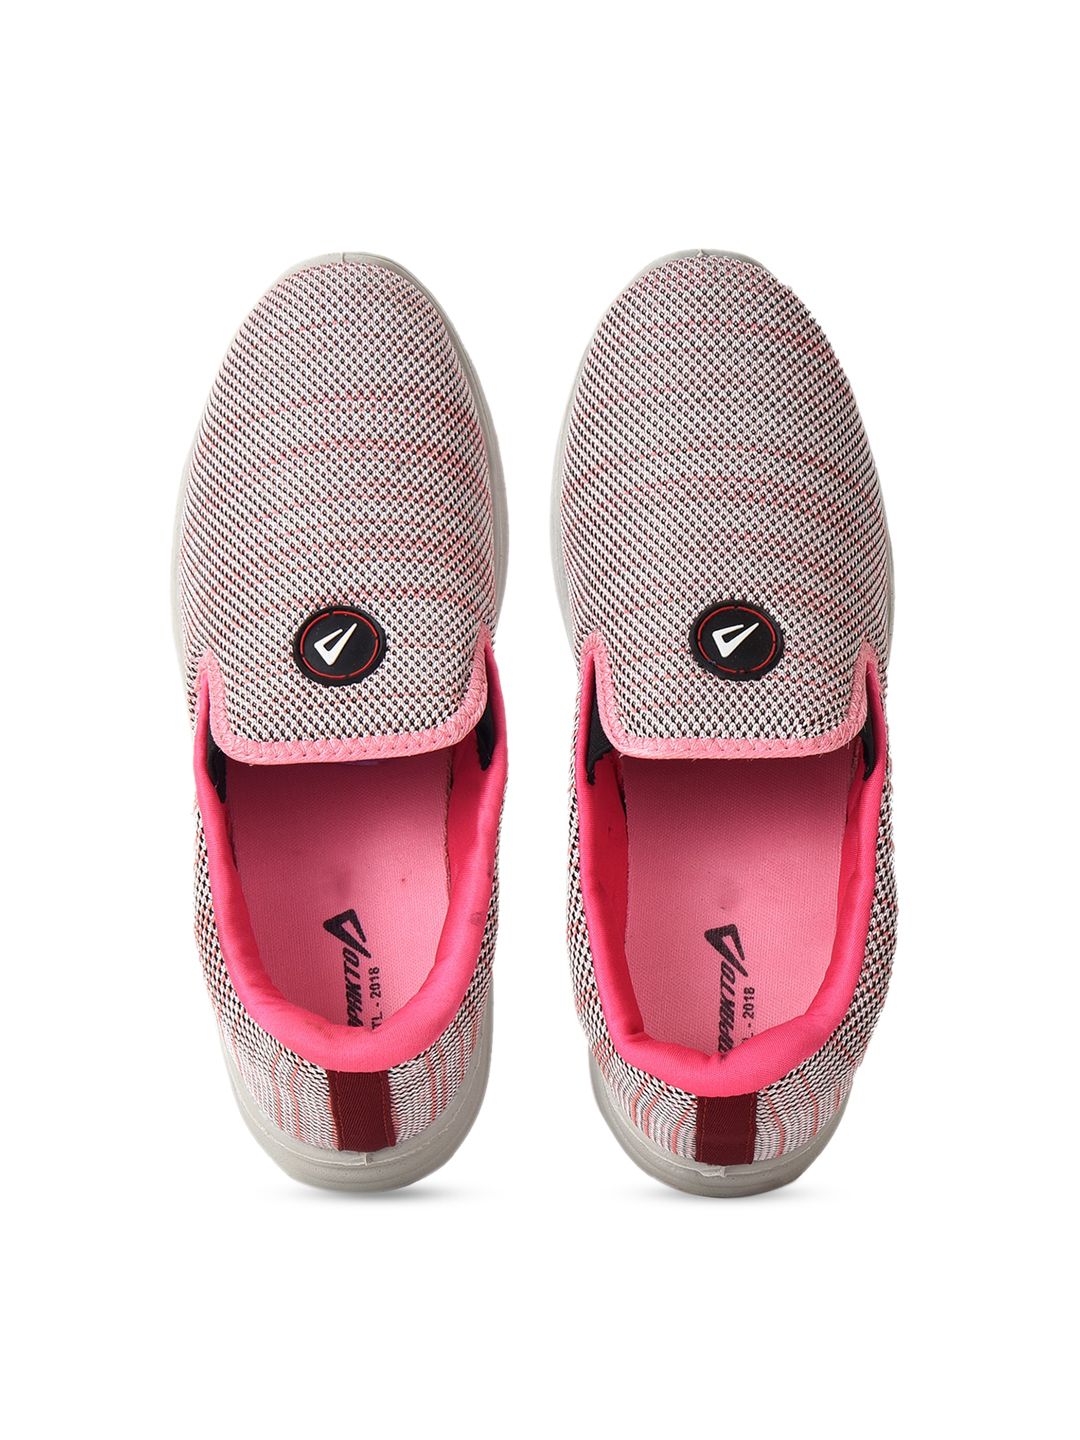 IMPAKTO Women Pink Woven Design Slip-On Sneakers Price in India